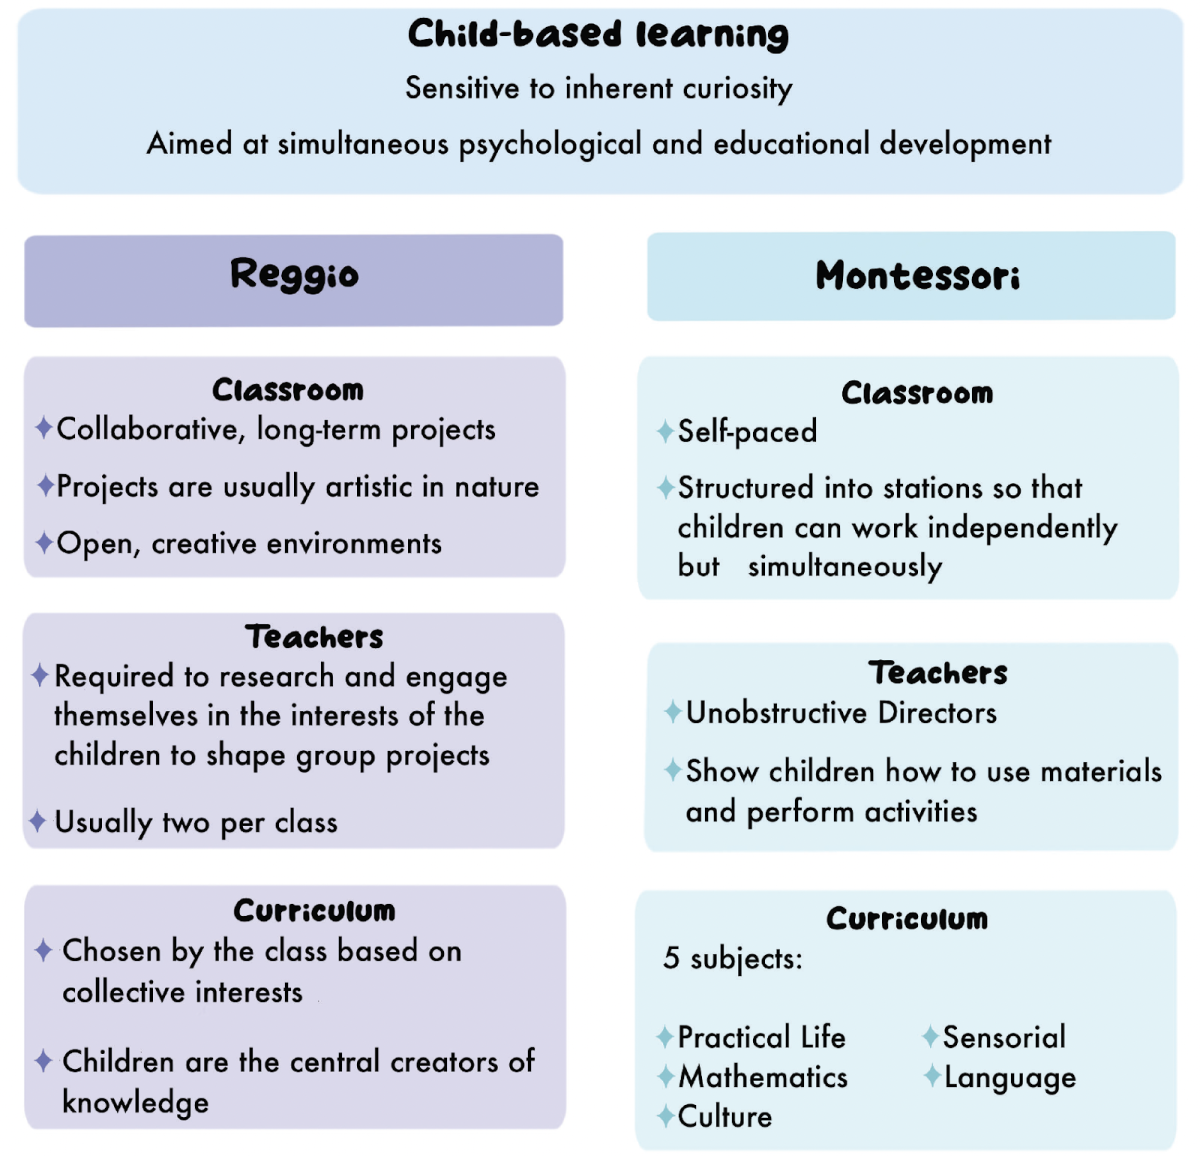 The differences between Montessori and Reggio preschool styles.